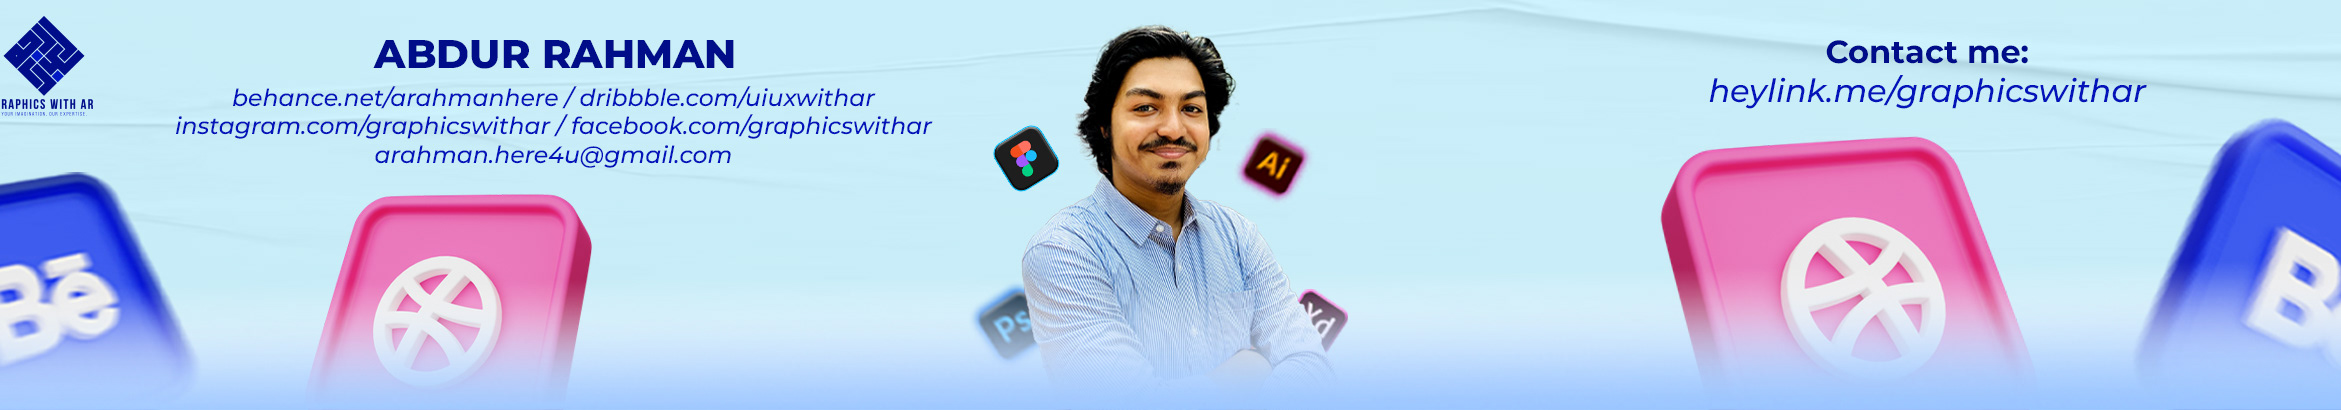 Abdur Rahman's profile banner